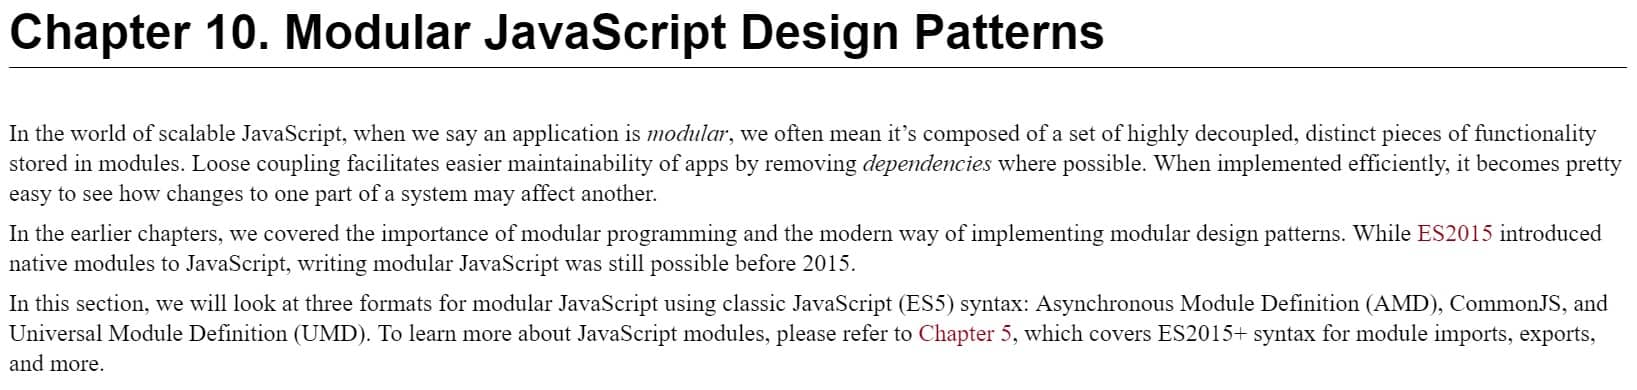 فصل 10 کتاب Learning JavaScript Design Patterns ویرایش دوم